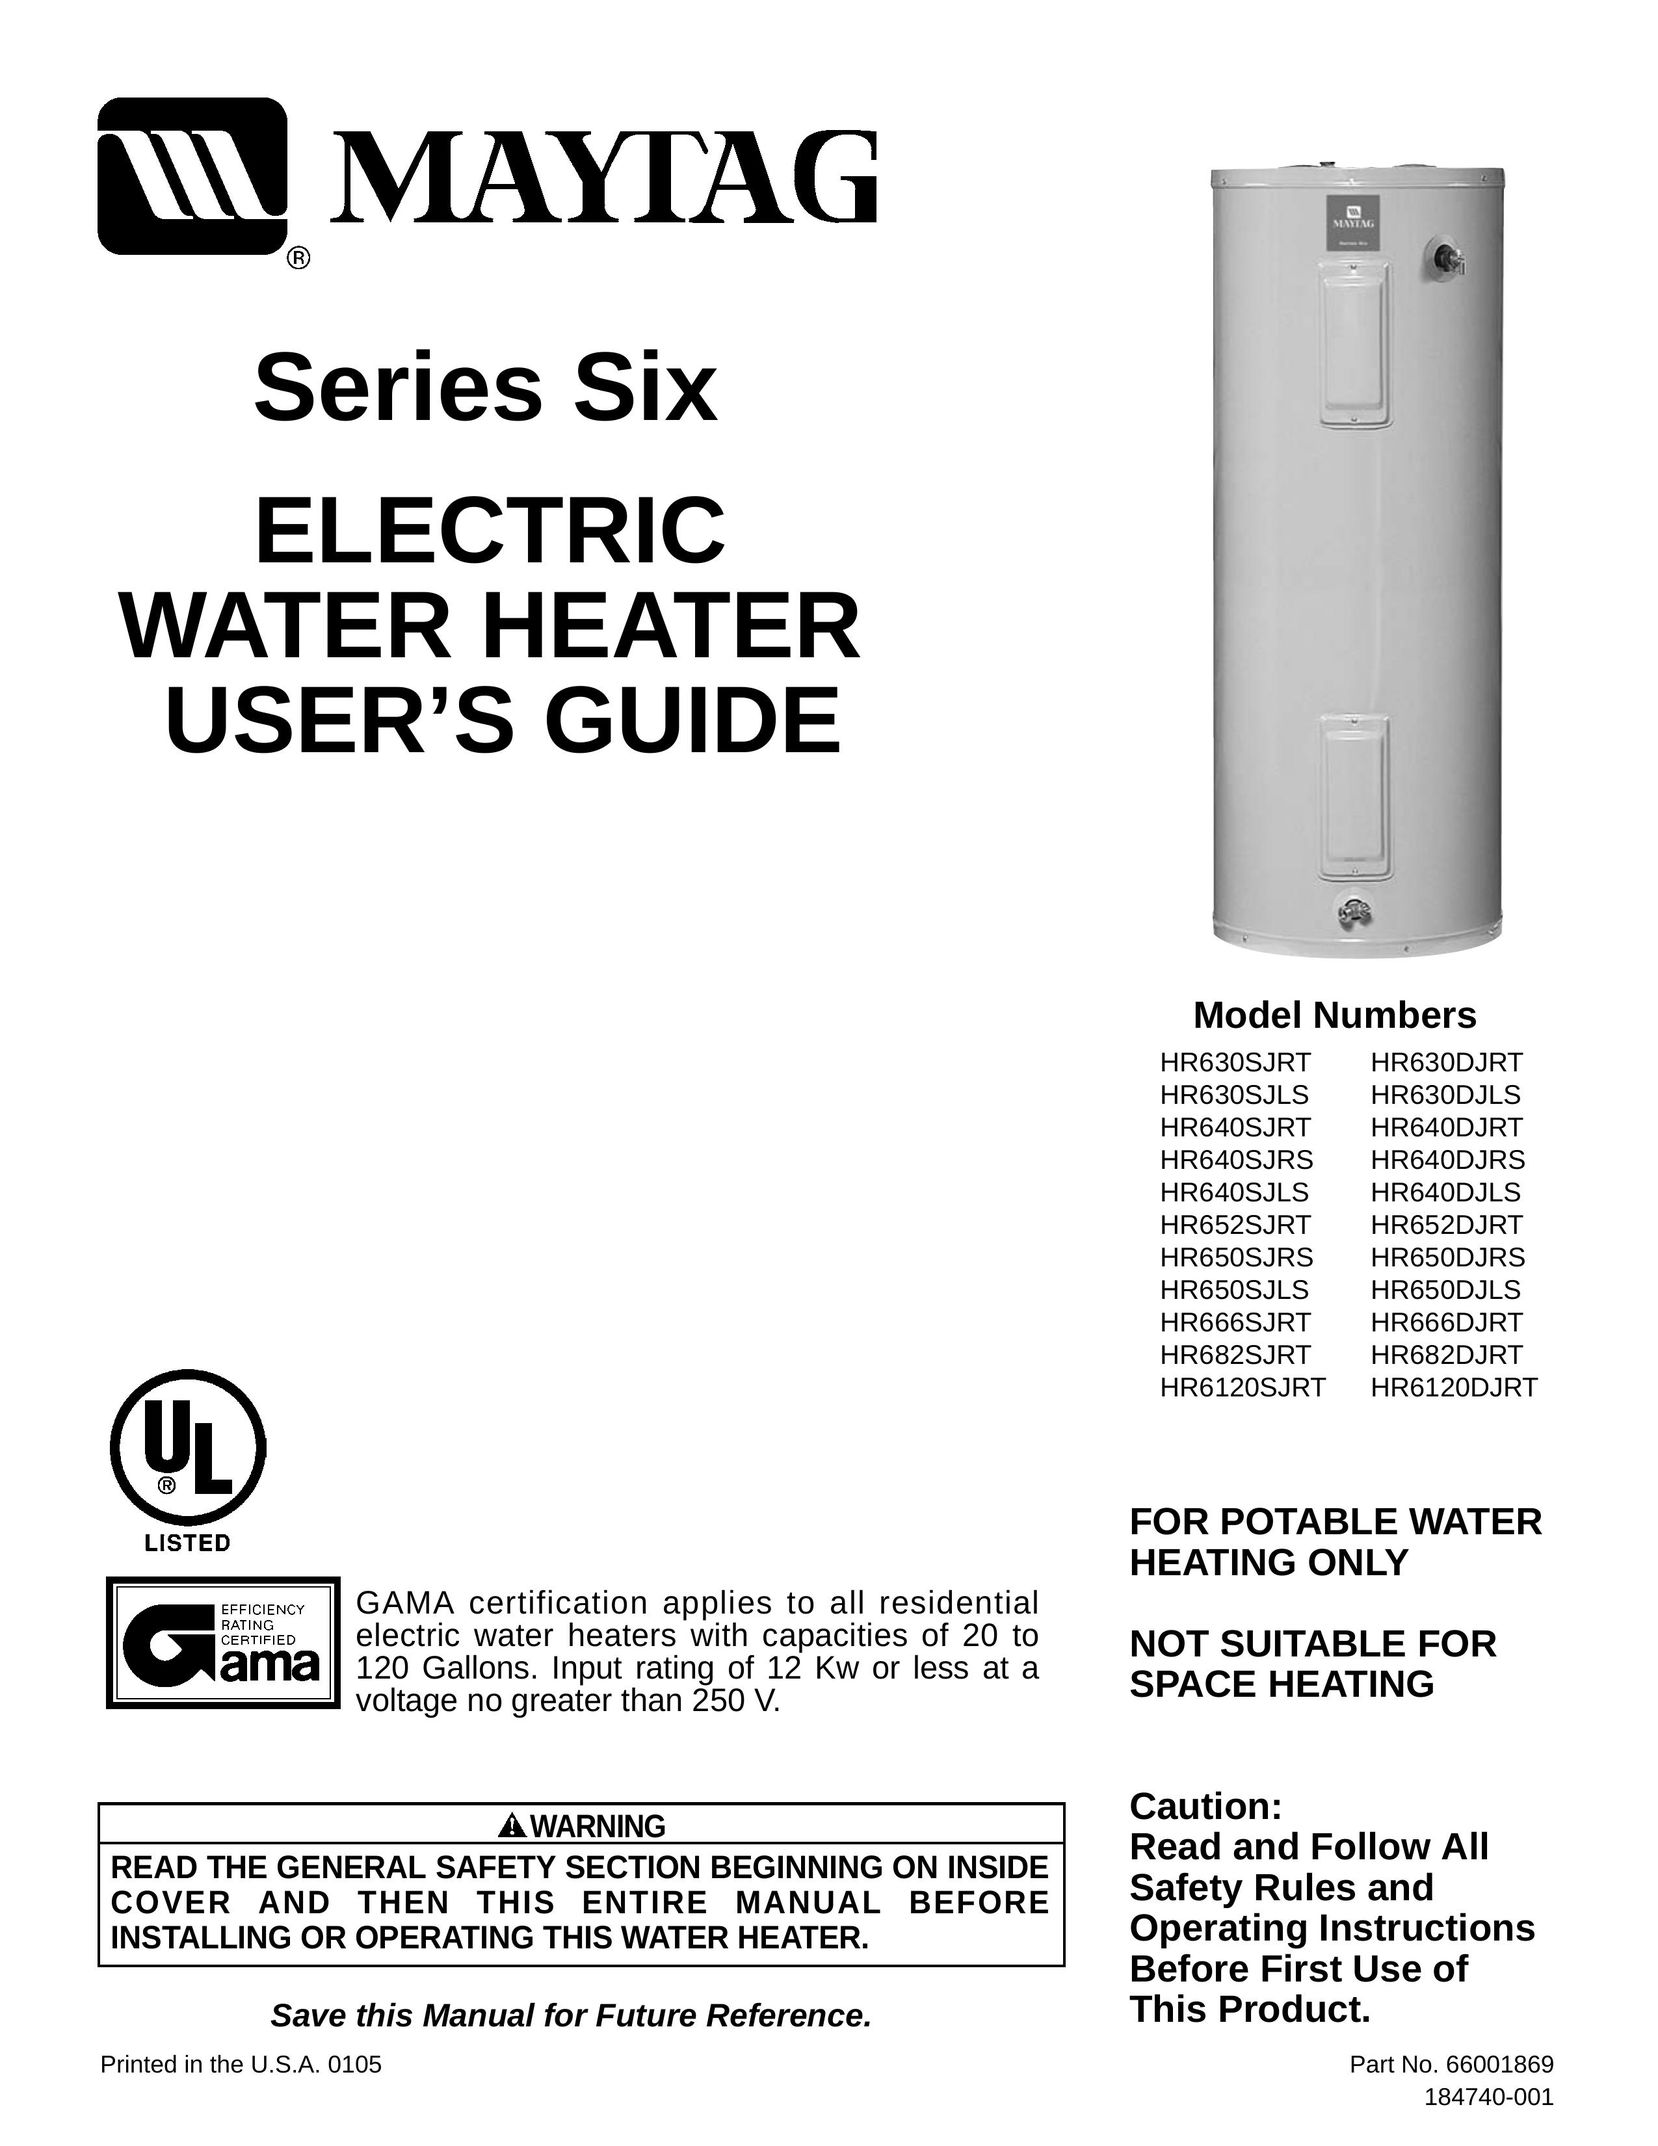 Maytag HR652DJRT Water Heater User Manual